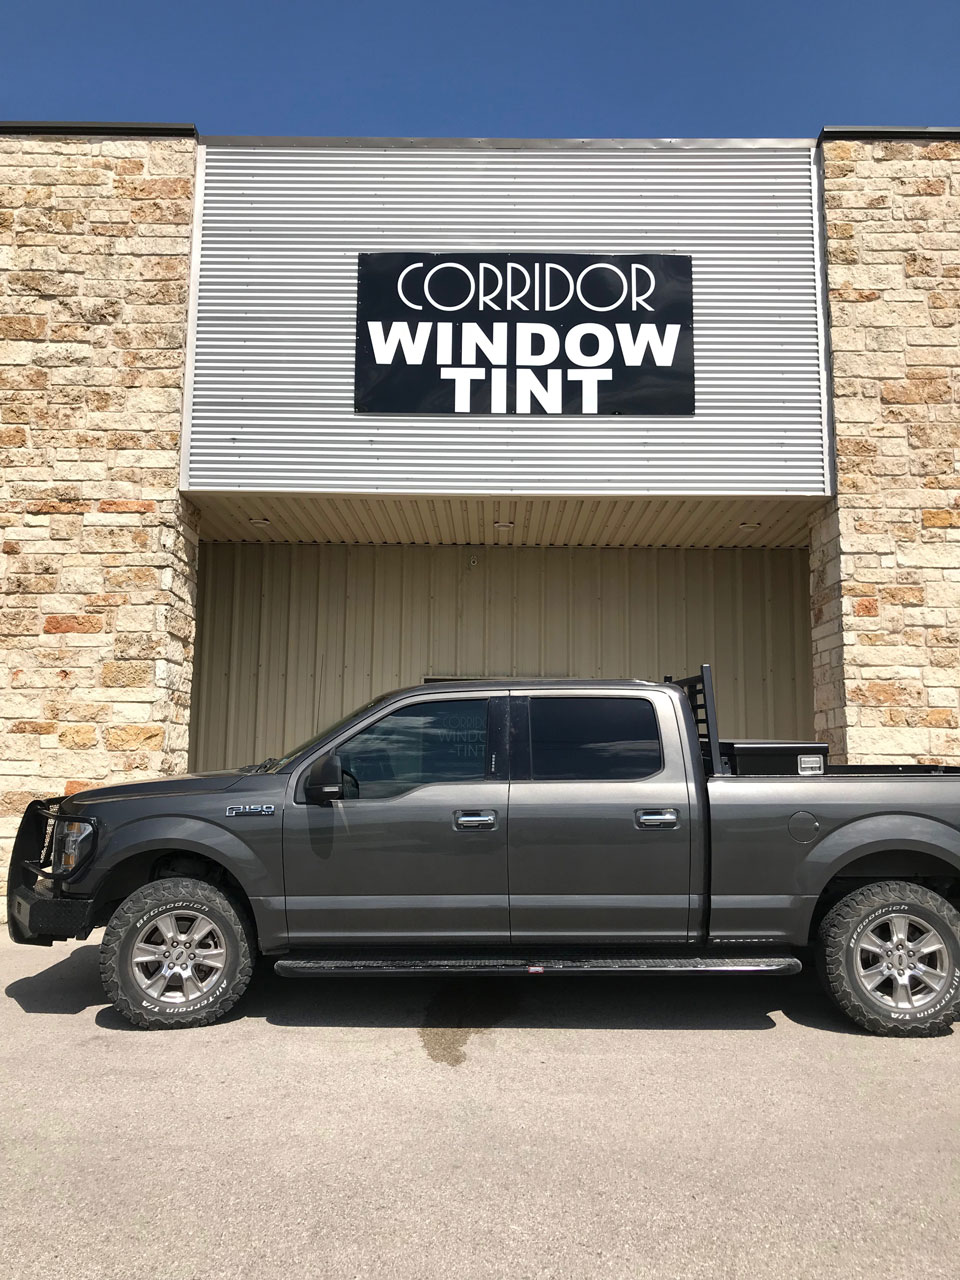 South Austin, TX Tint Specialist | Corridor Window Tint